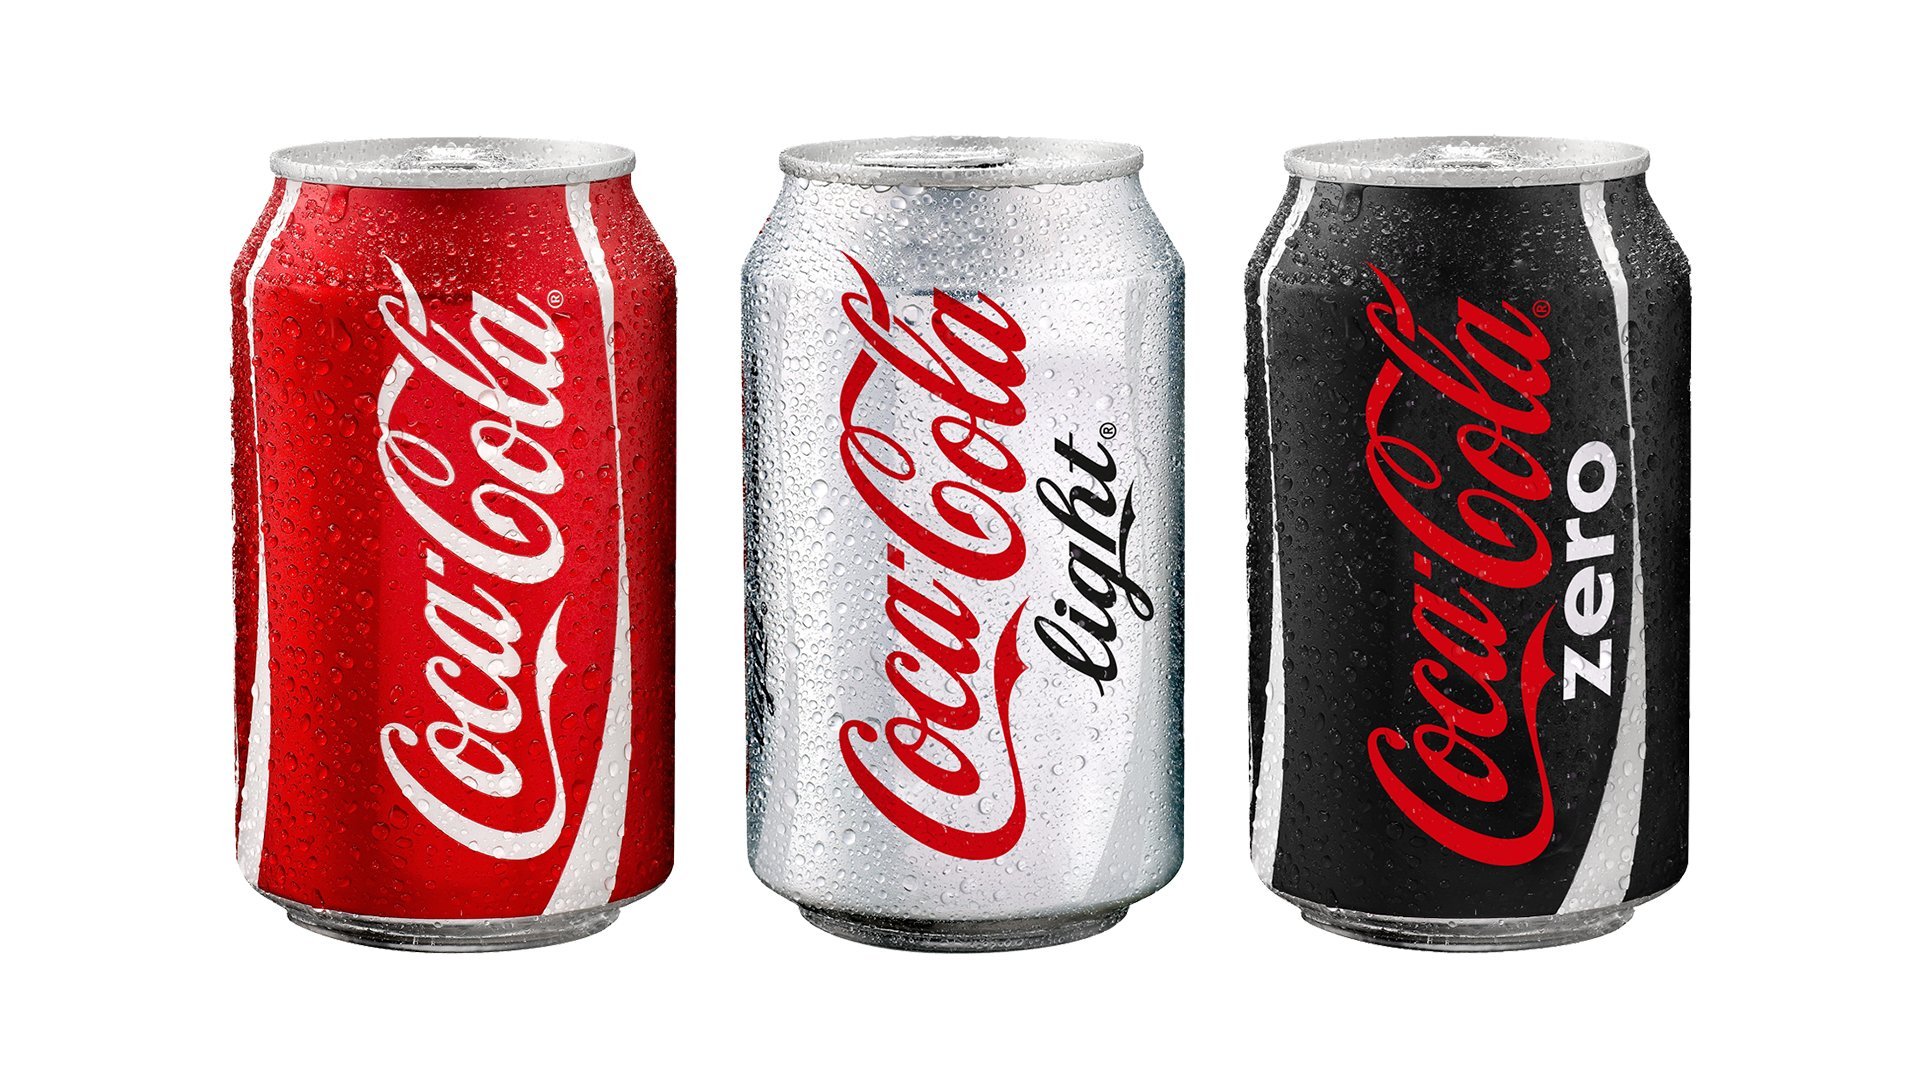 Coca-cola cans mockup by LOOP Associates